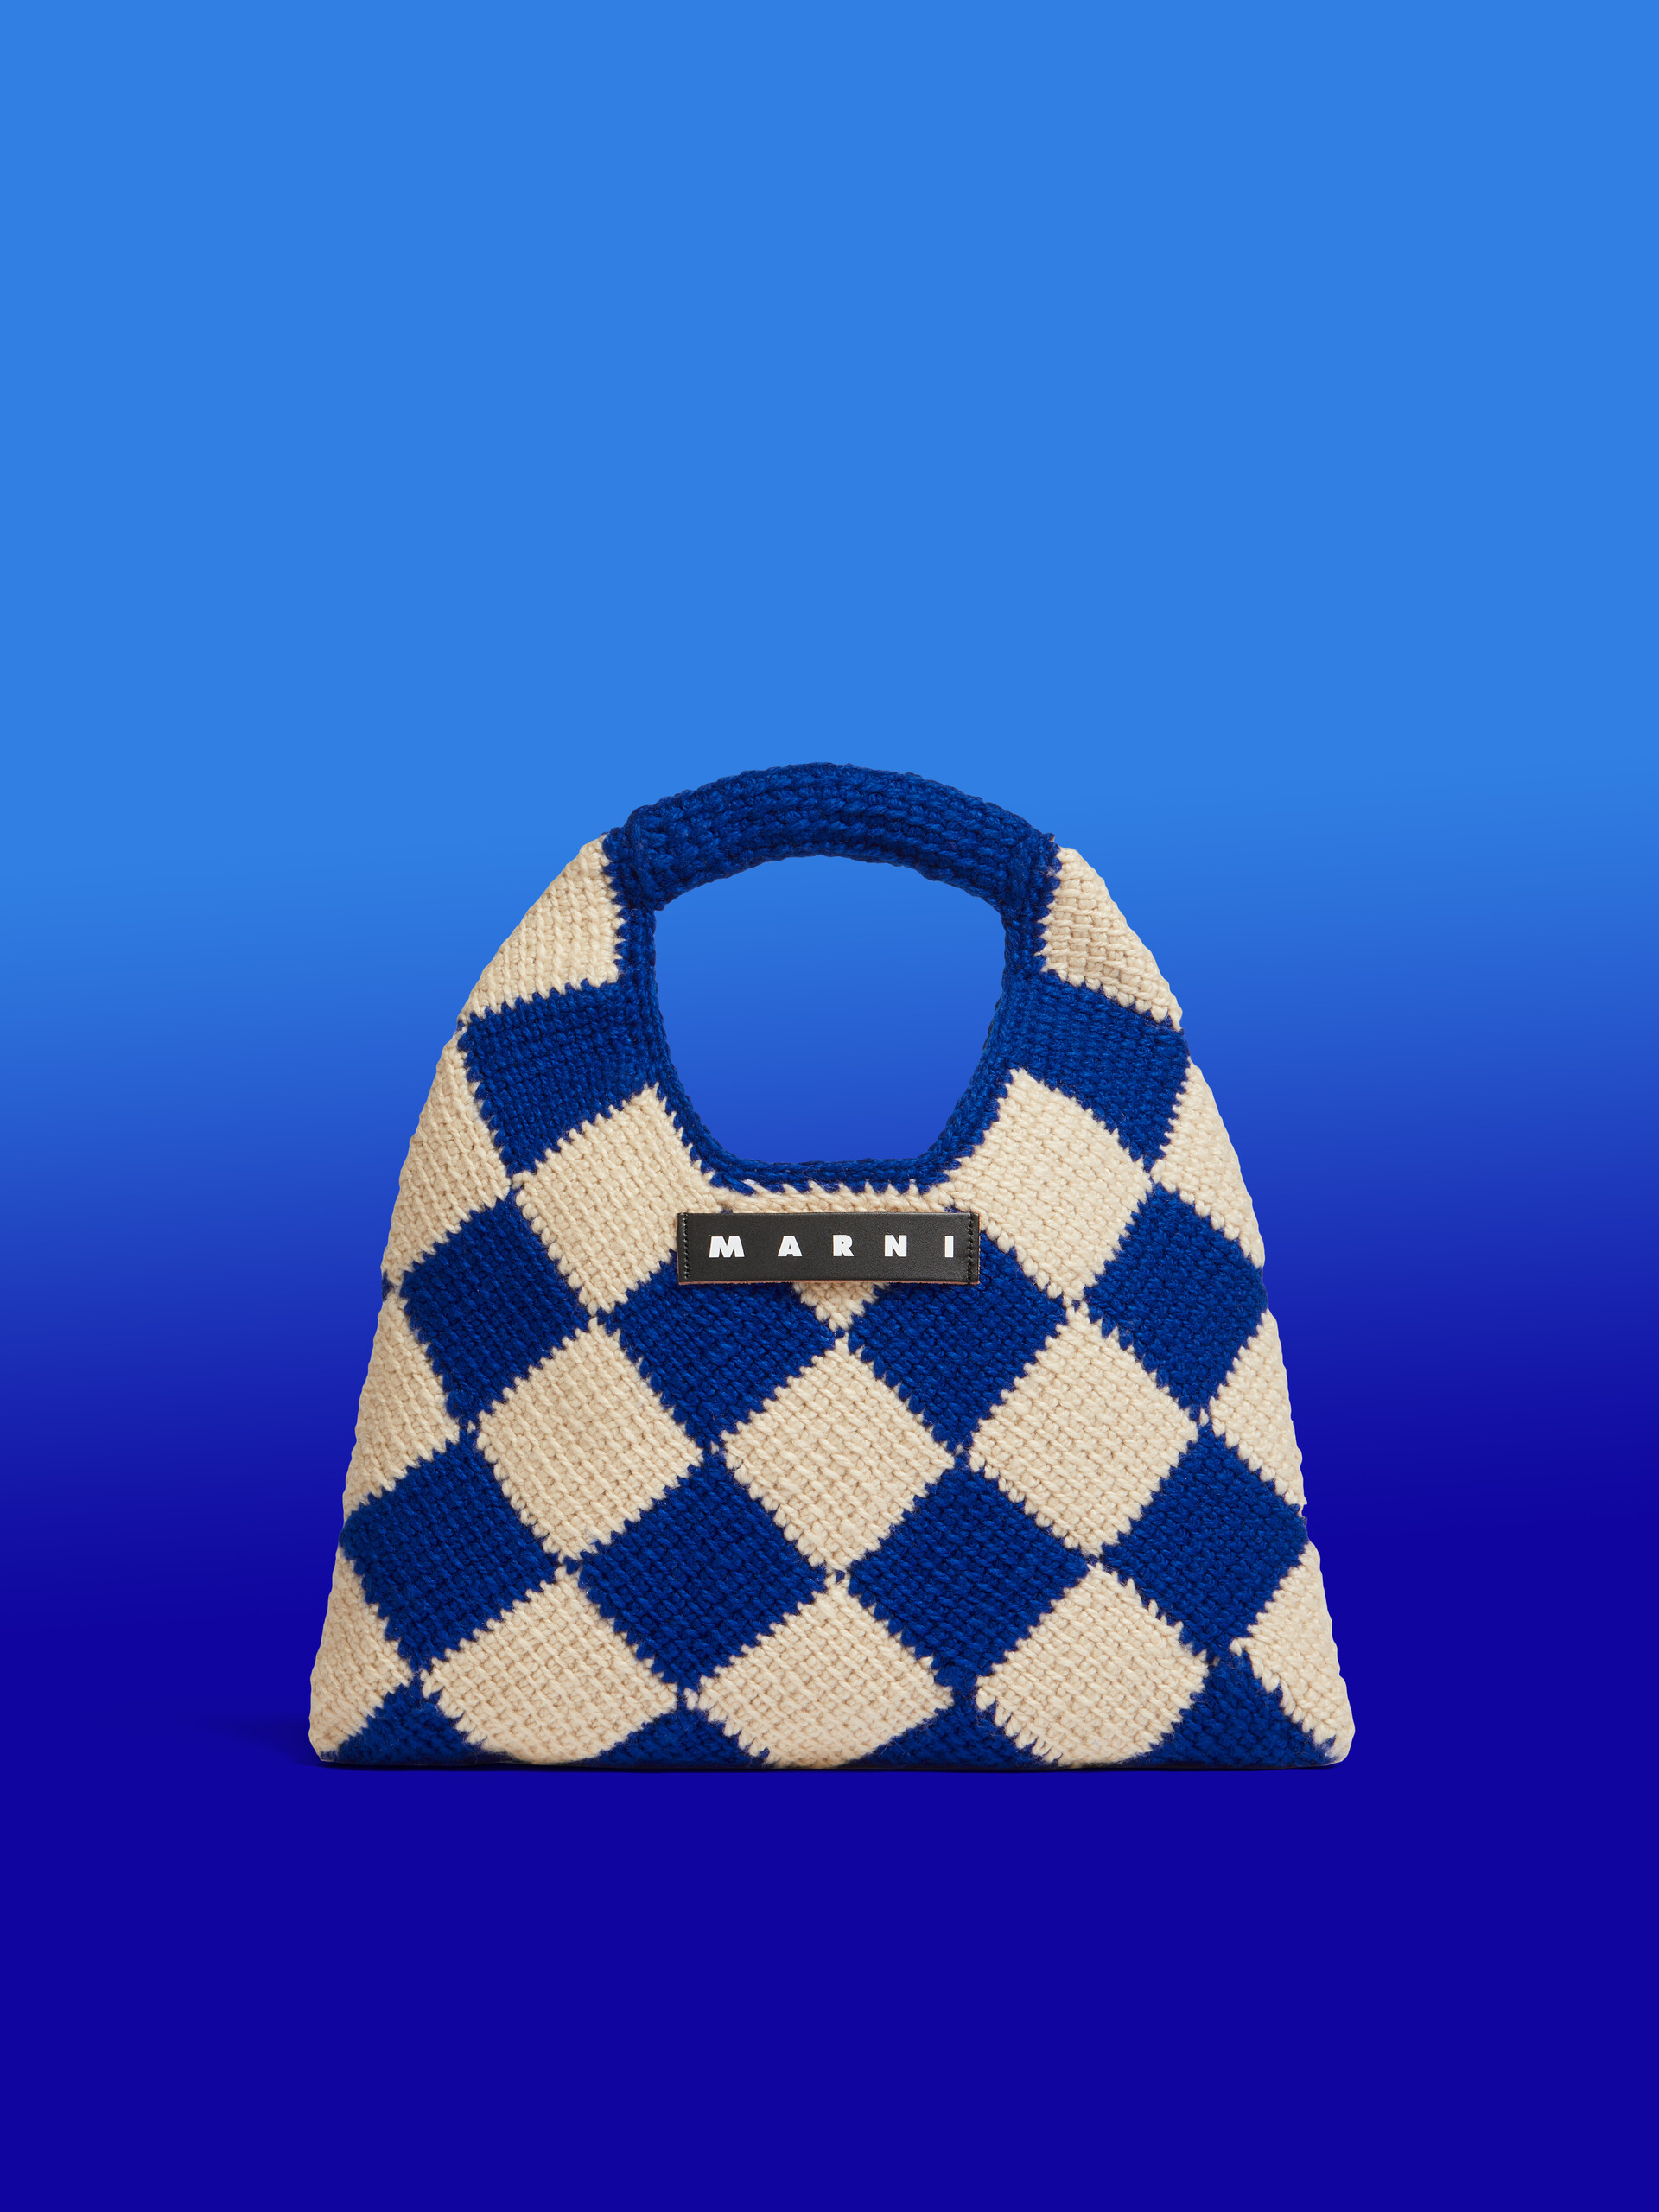 MARNI MARKET DIAMOND medium bag in blue and brown tech wool - Bags - Image 1